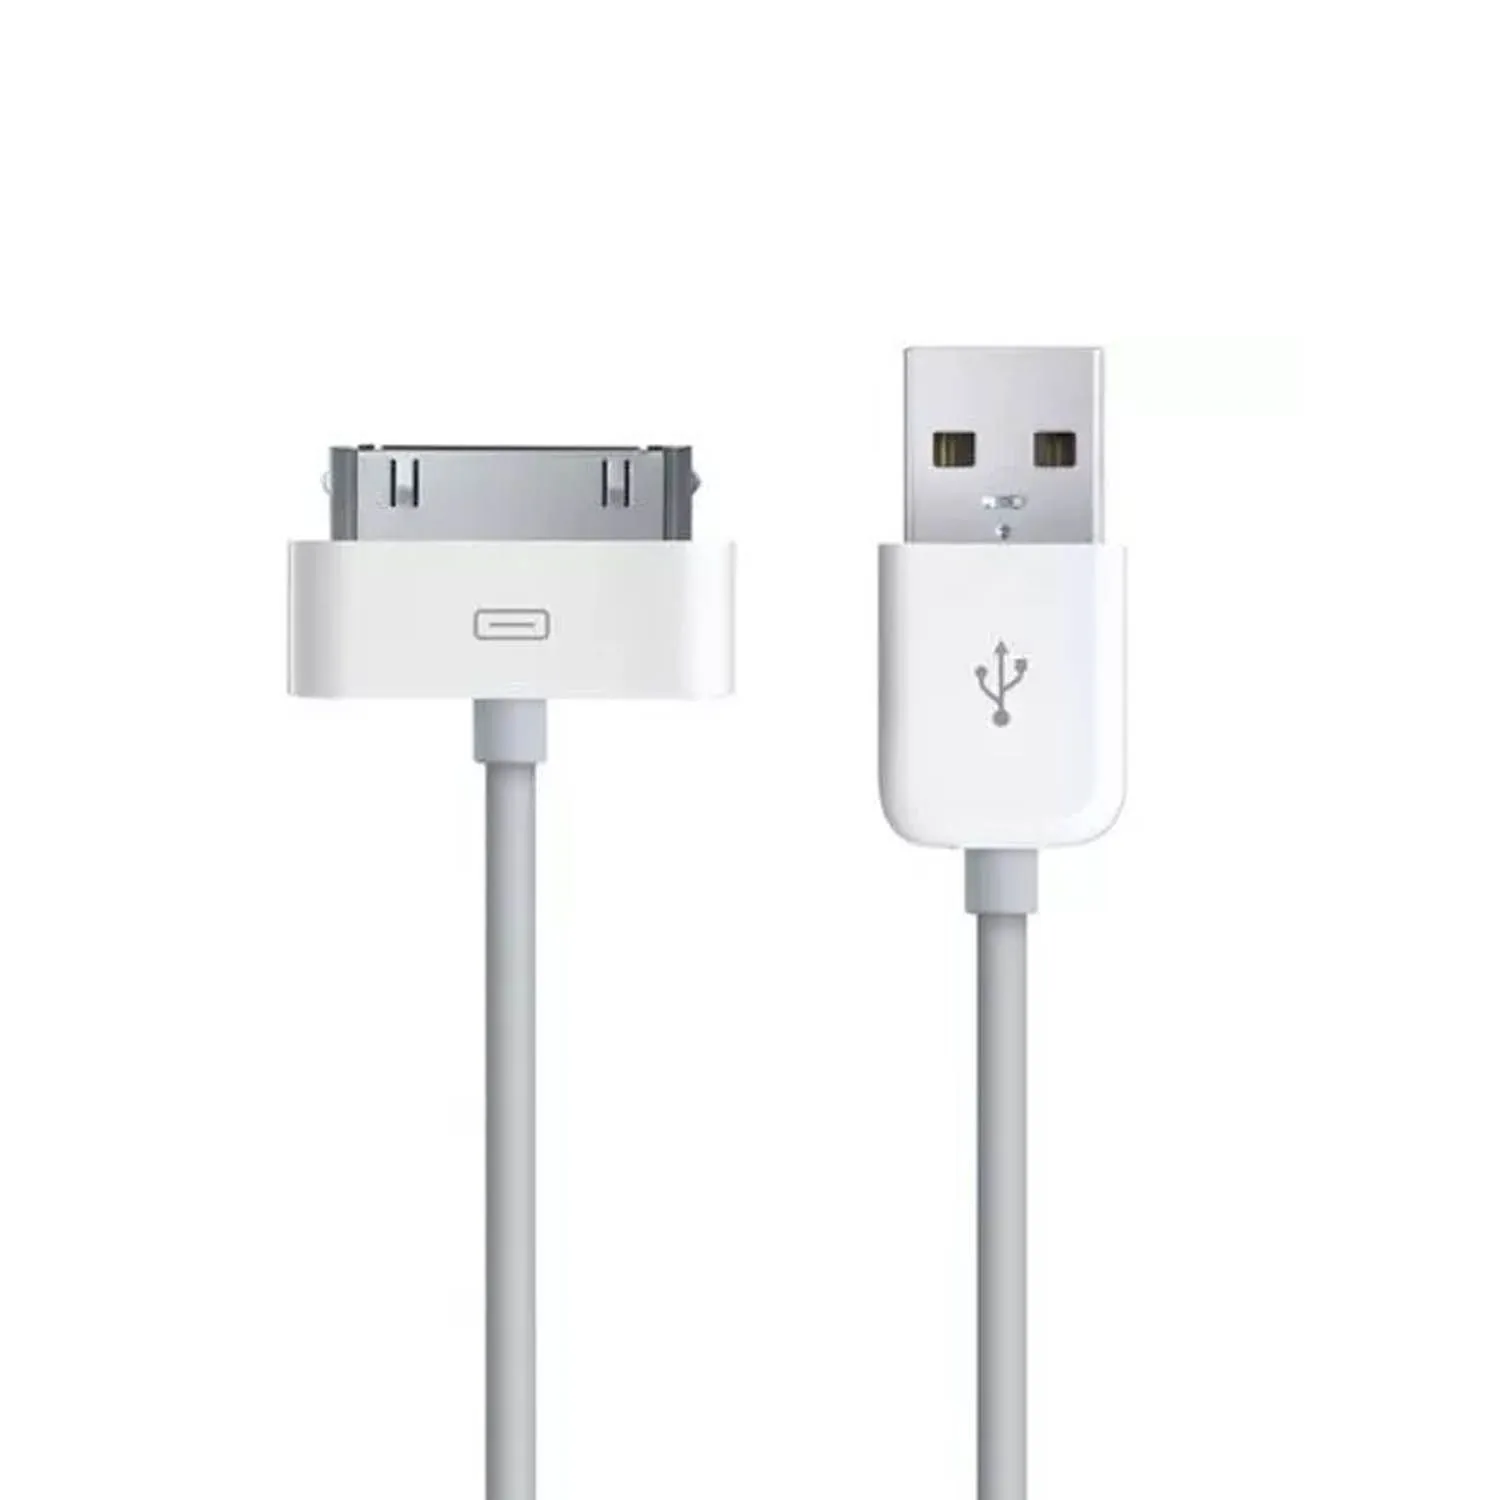 USB Кабель Apple iPhone 4 iPod iPad iPad 2 1м (белый)